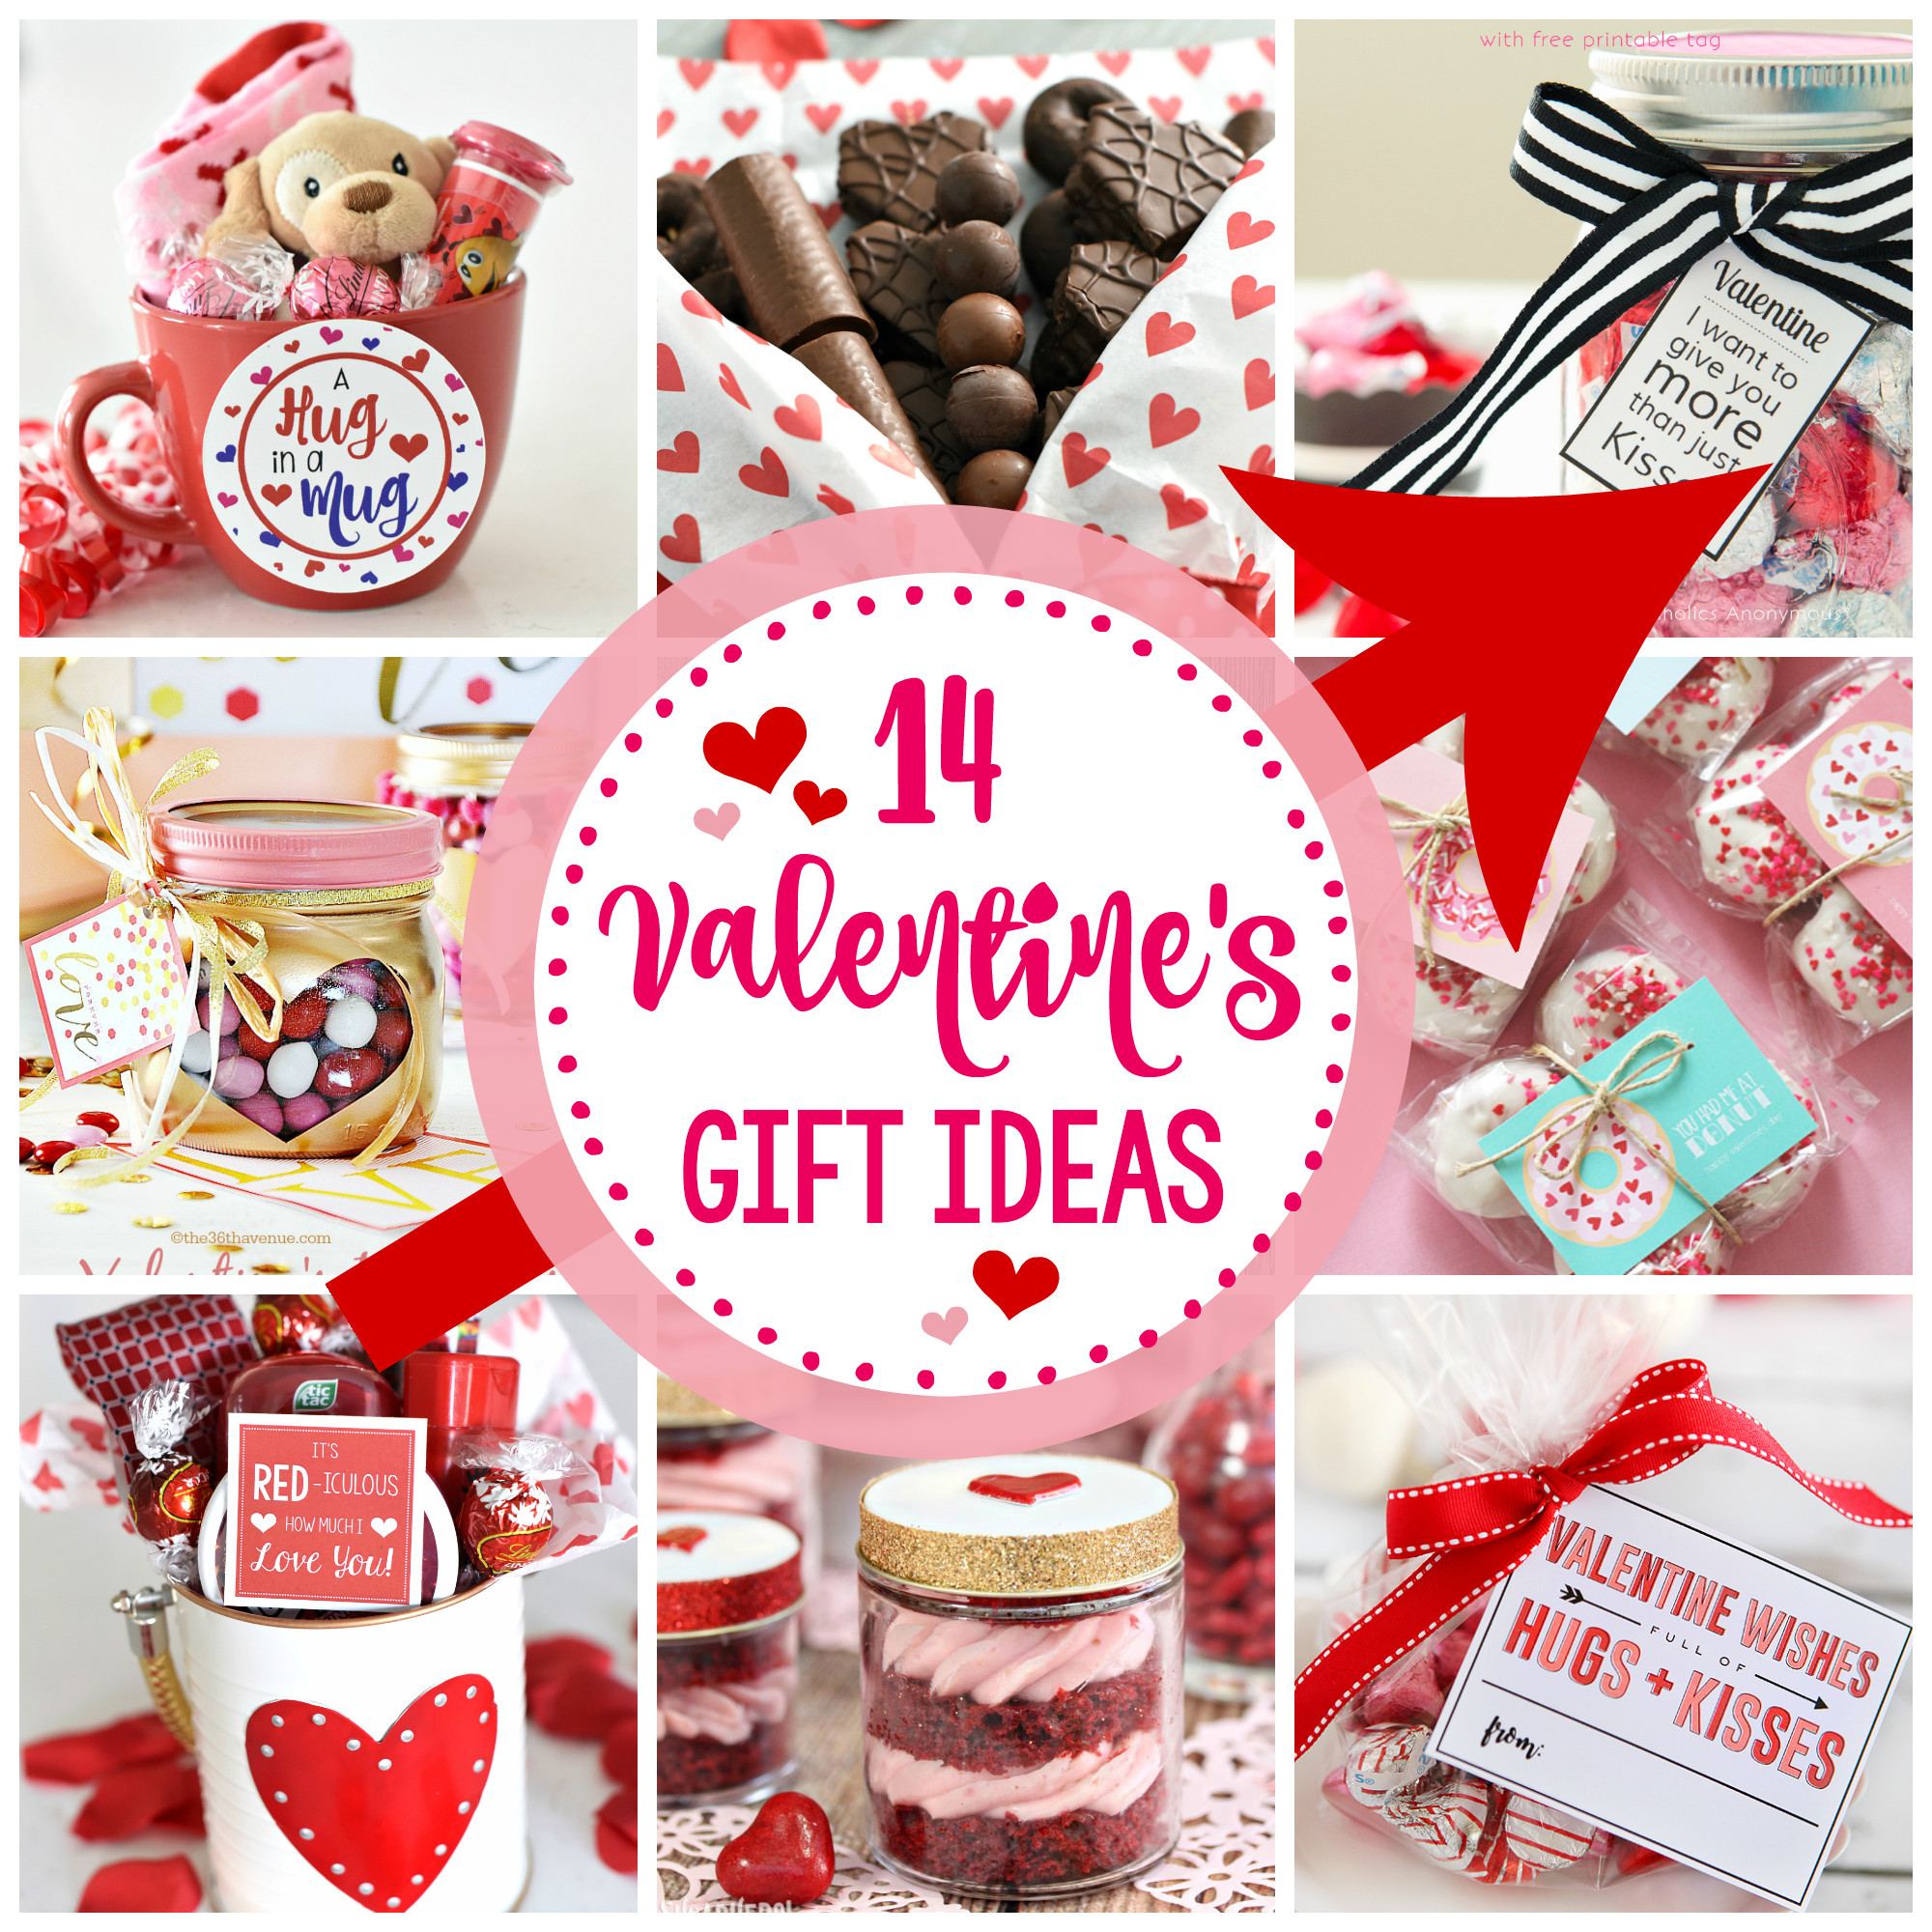 Pinterest Valentines Gift Ideas
 14 Fun & Creative Valentine s Day Gift Ideas – Fun Squared